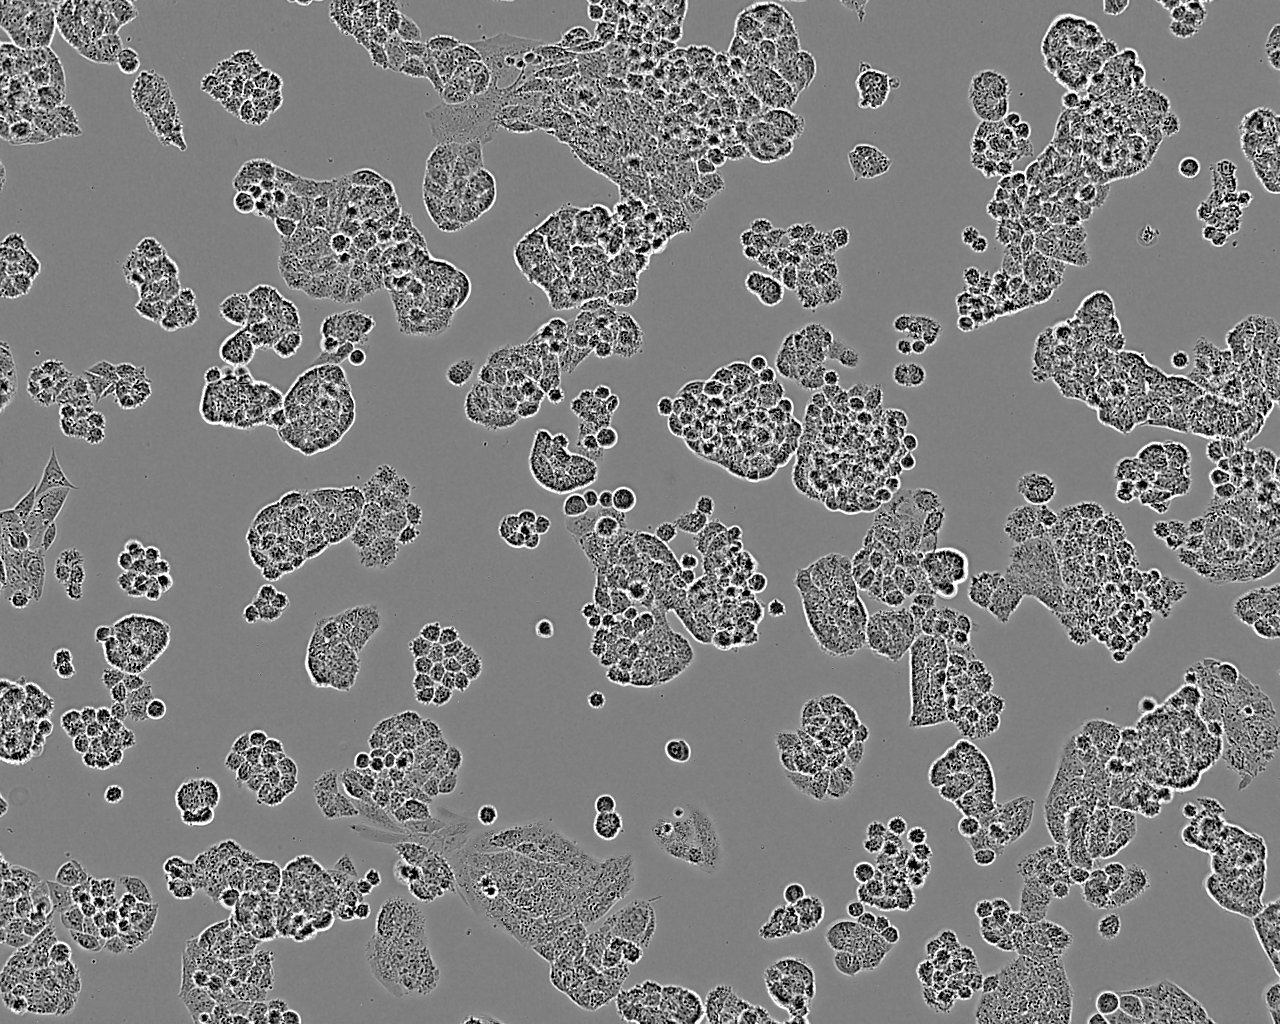 MDBK Cell:牛肾细胞系,MDBK Cell